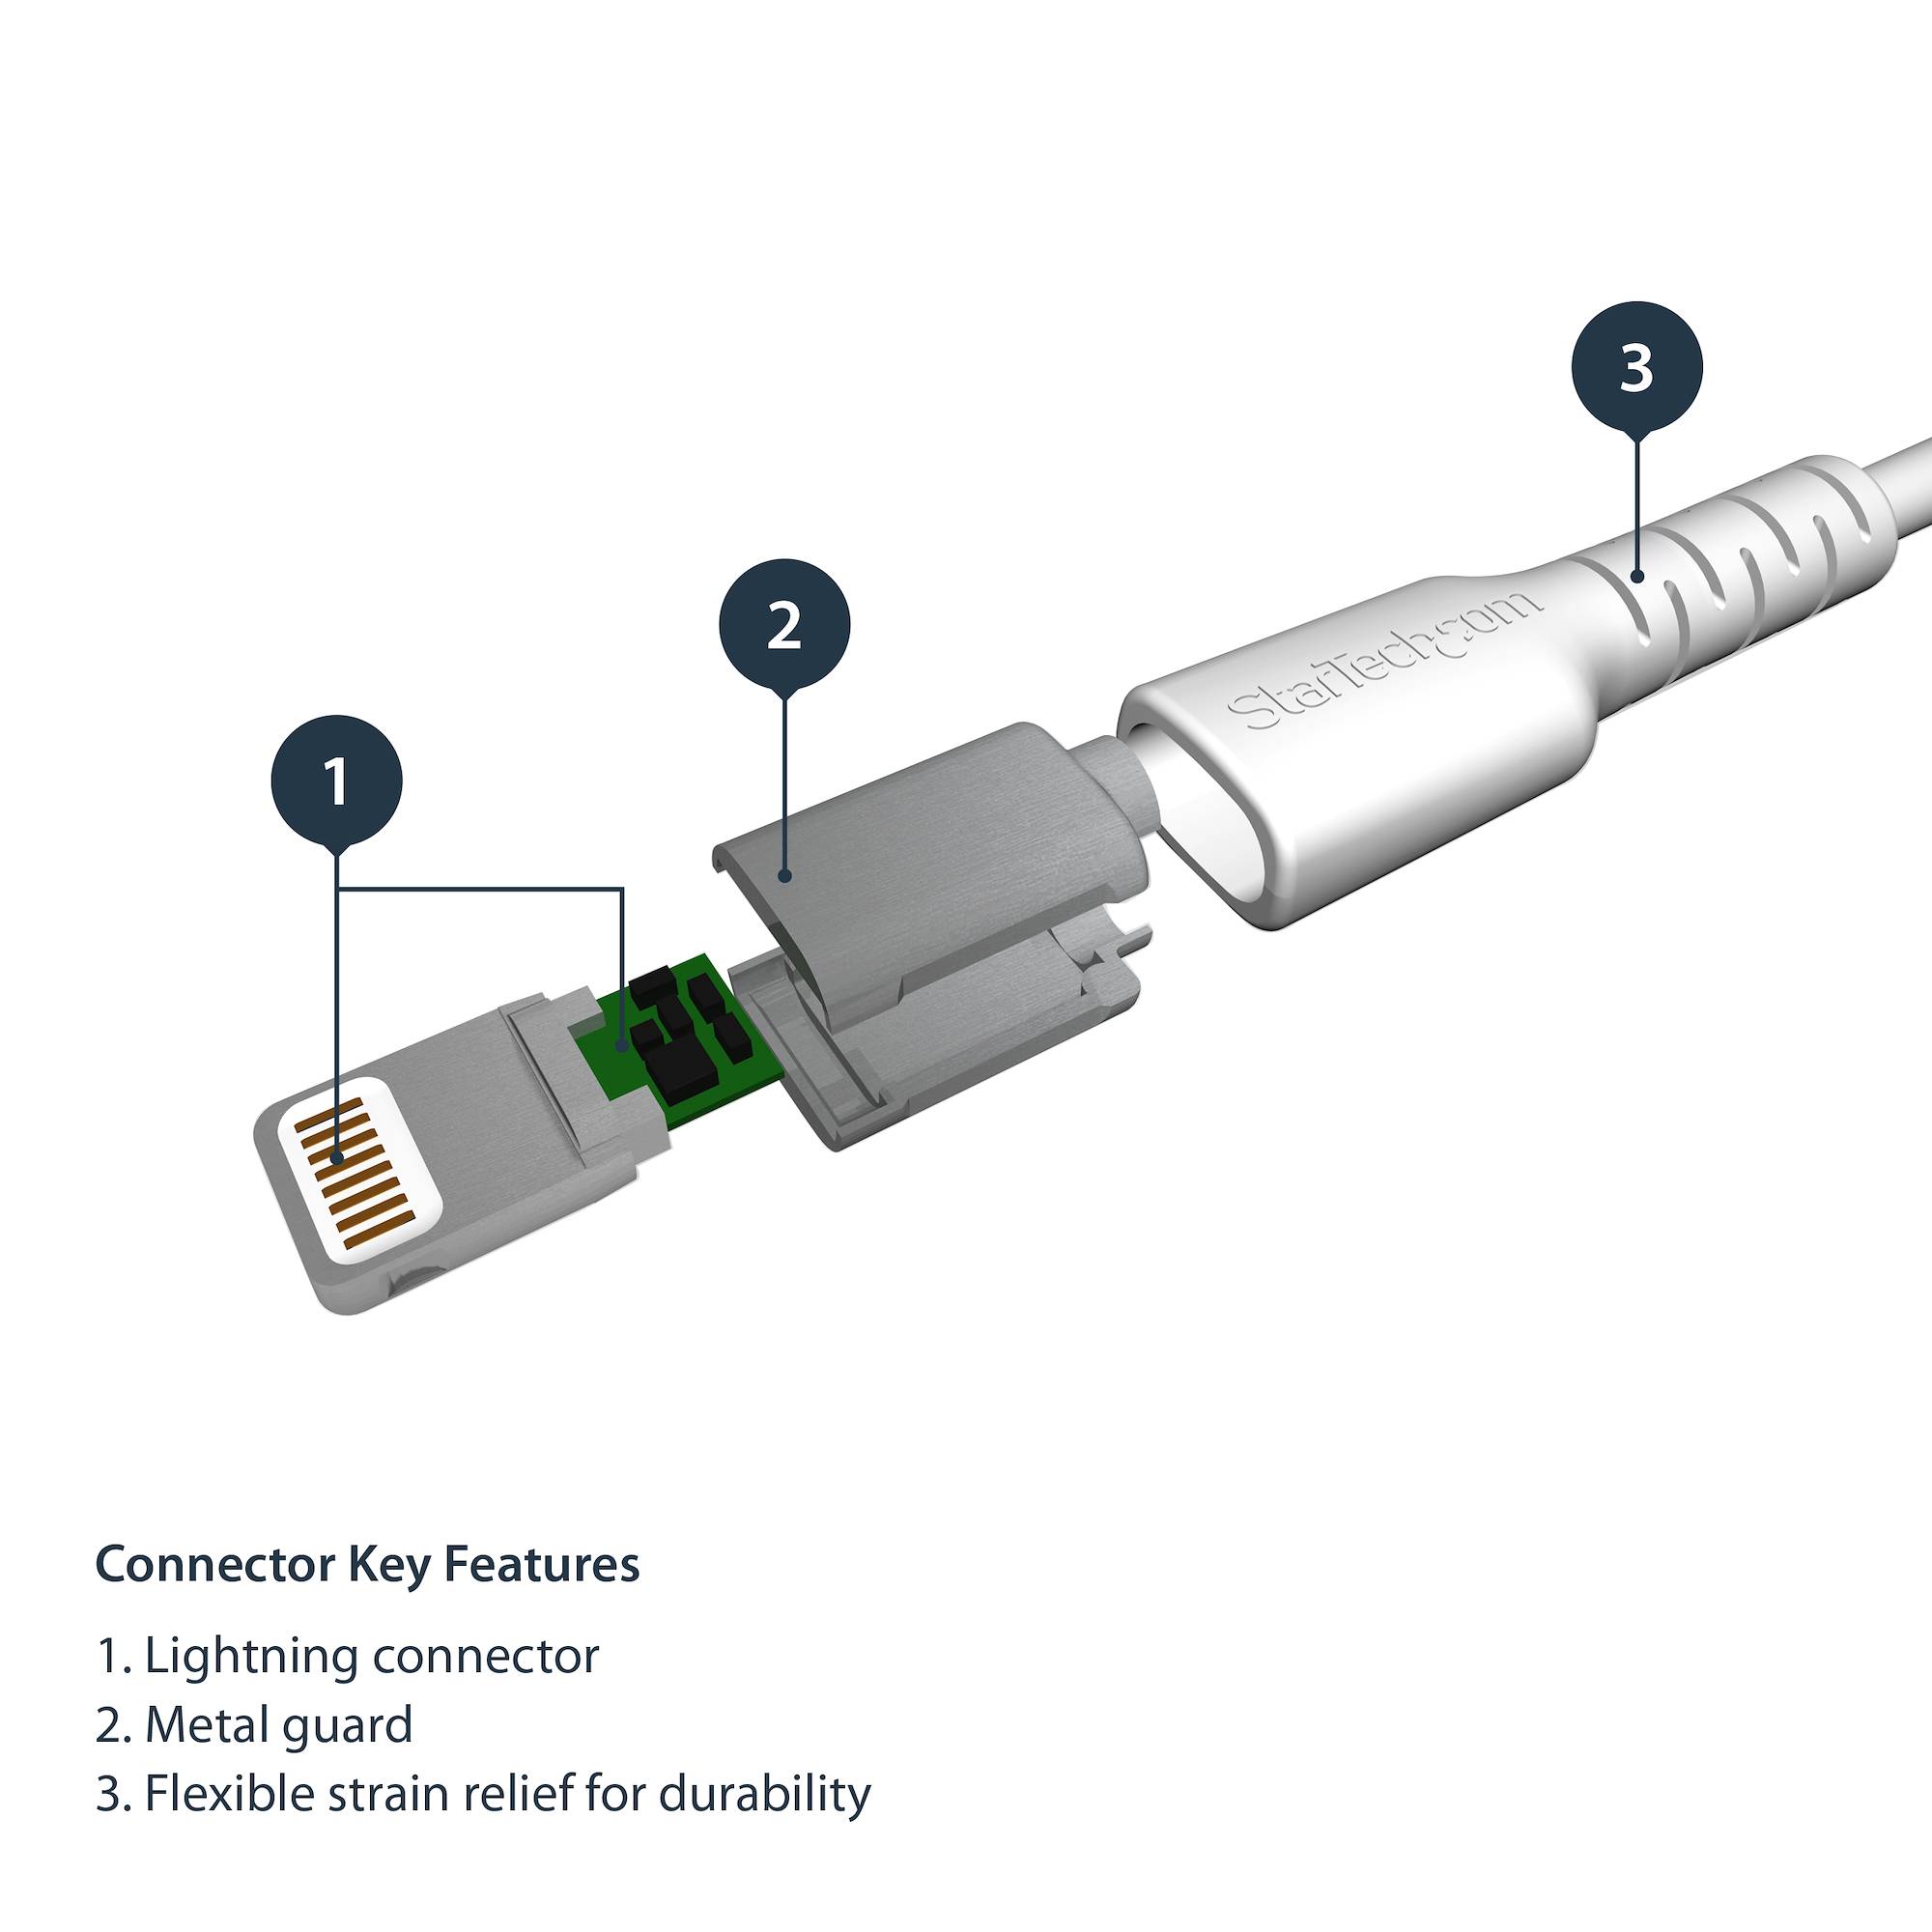 Rca Informatique - image du produit : 2M USB TO LIGHTNING CABLE APPLE MFI CRTIFIED DUPONT KEVLAR